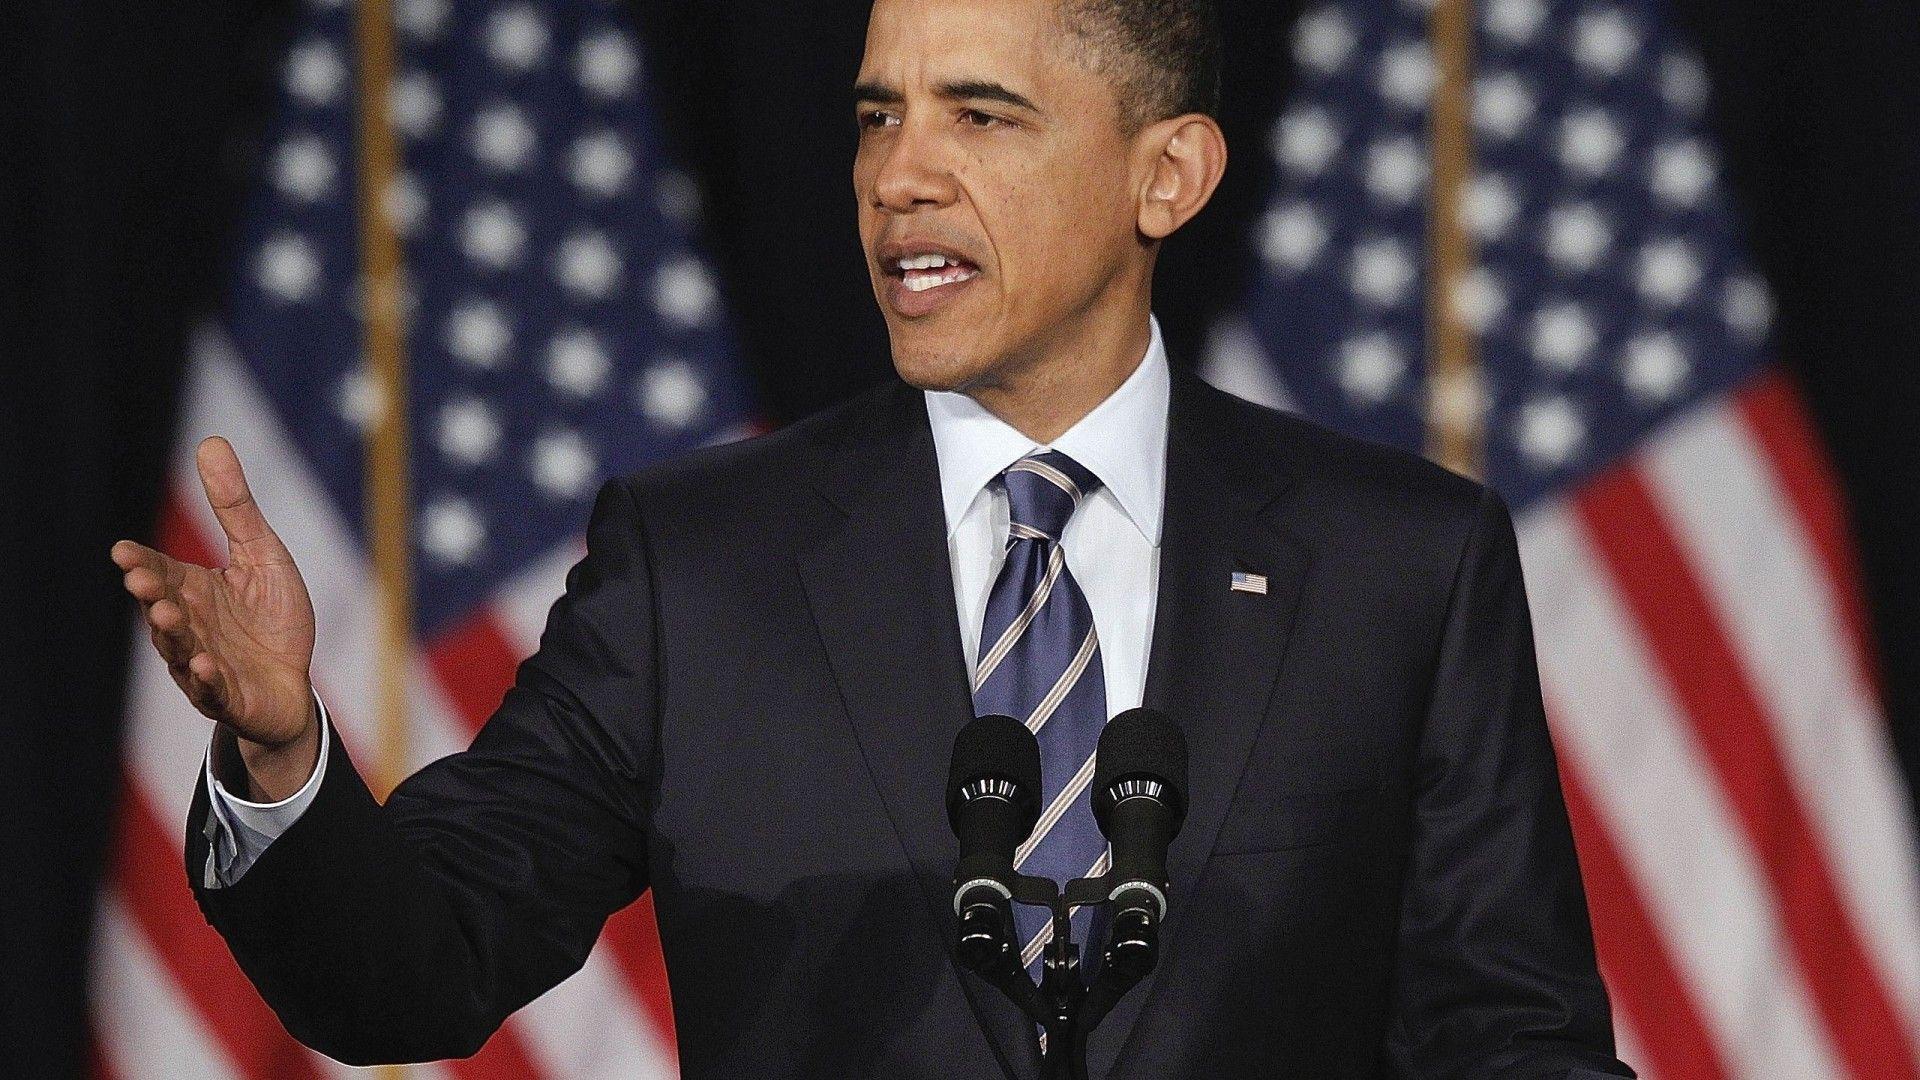 Barack Obama new HD wallpaper. wollpopor